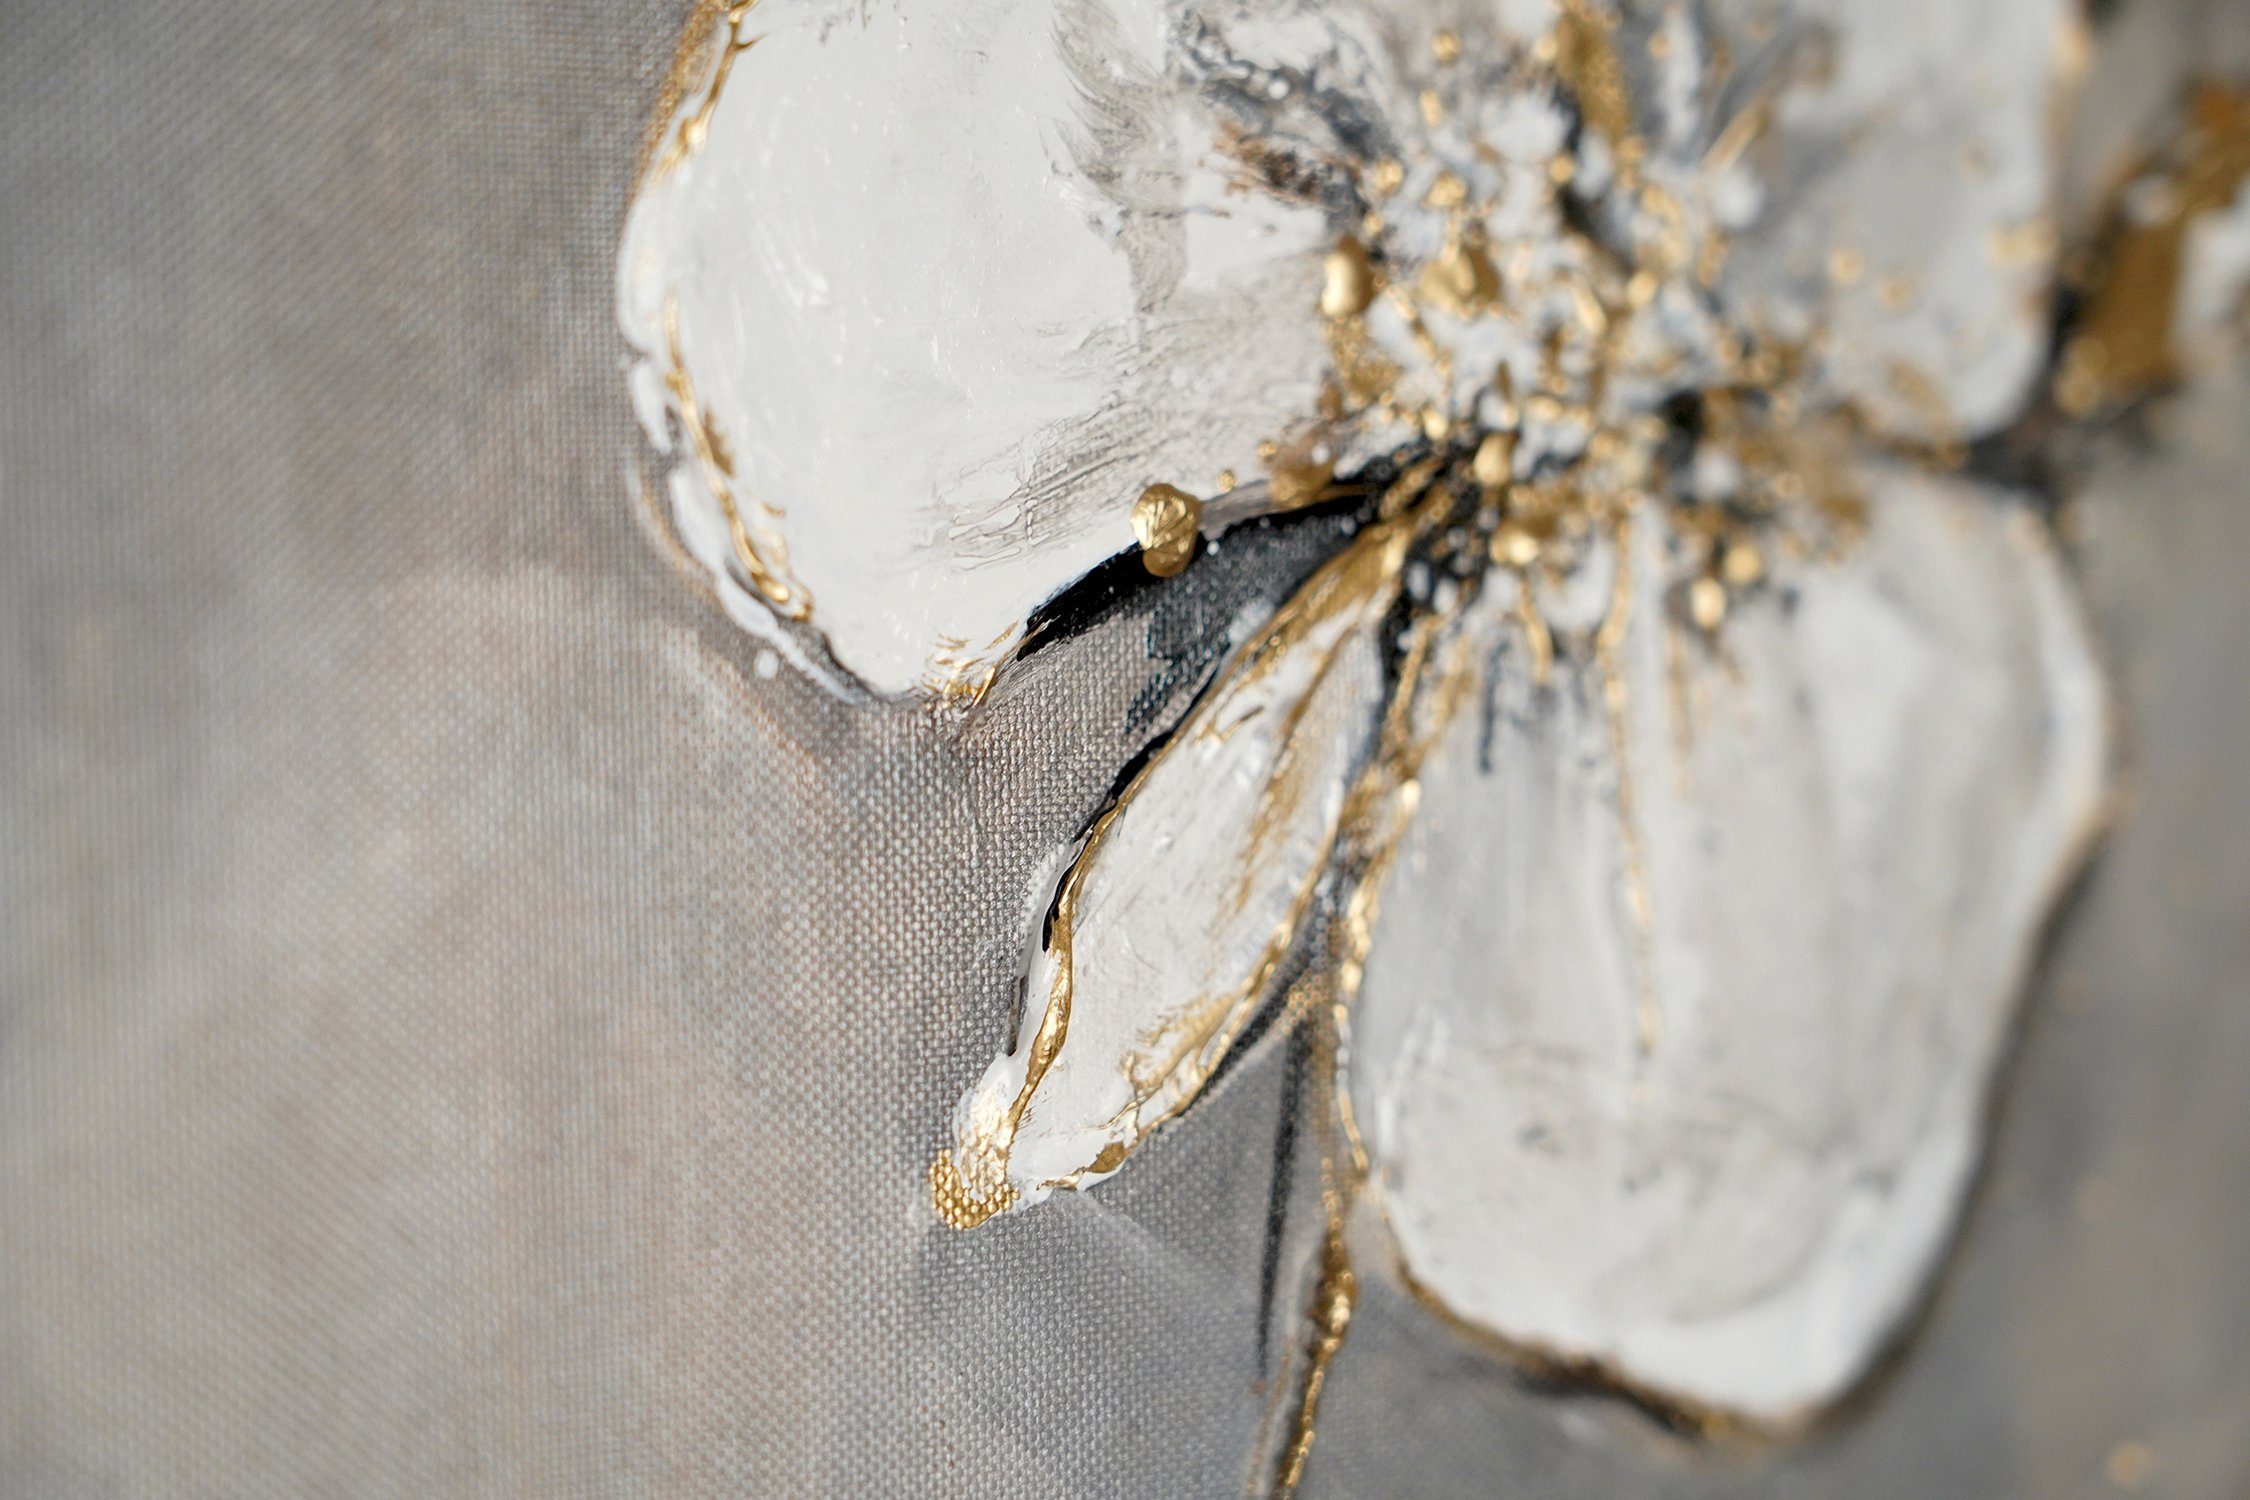 YS-Art Gemälde Goldene vorm Frau mit Leinwndbild Blüten, Rahmen Spiegel